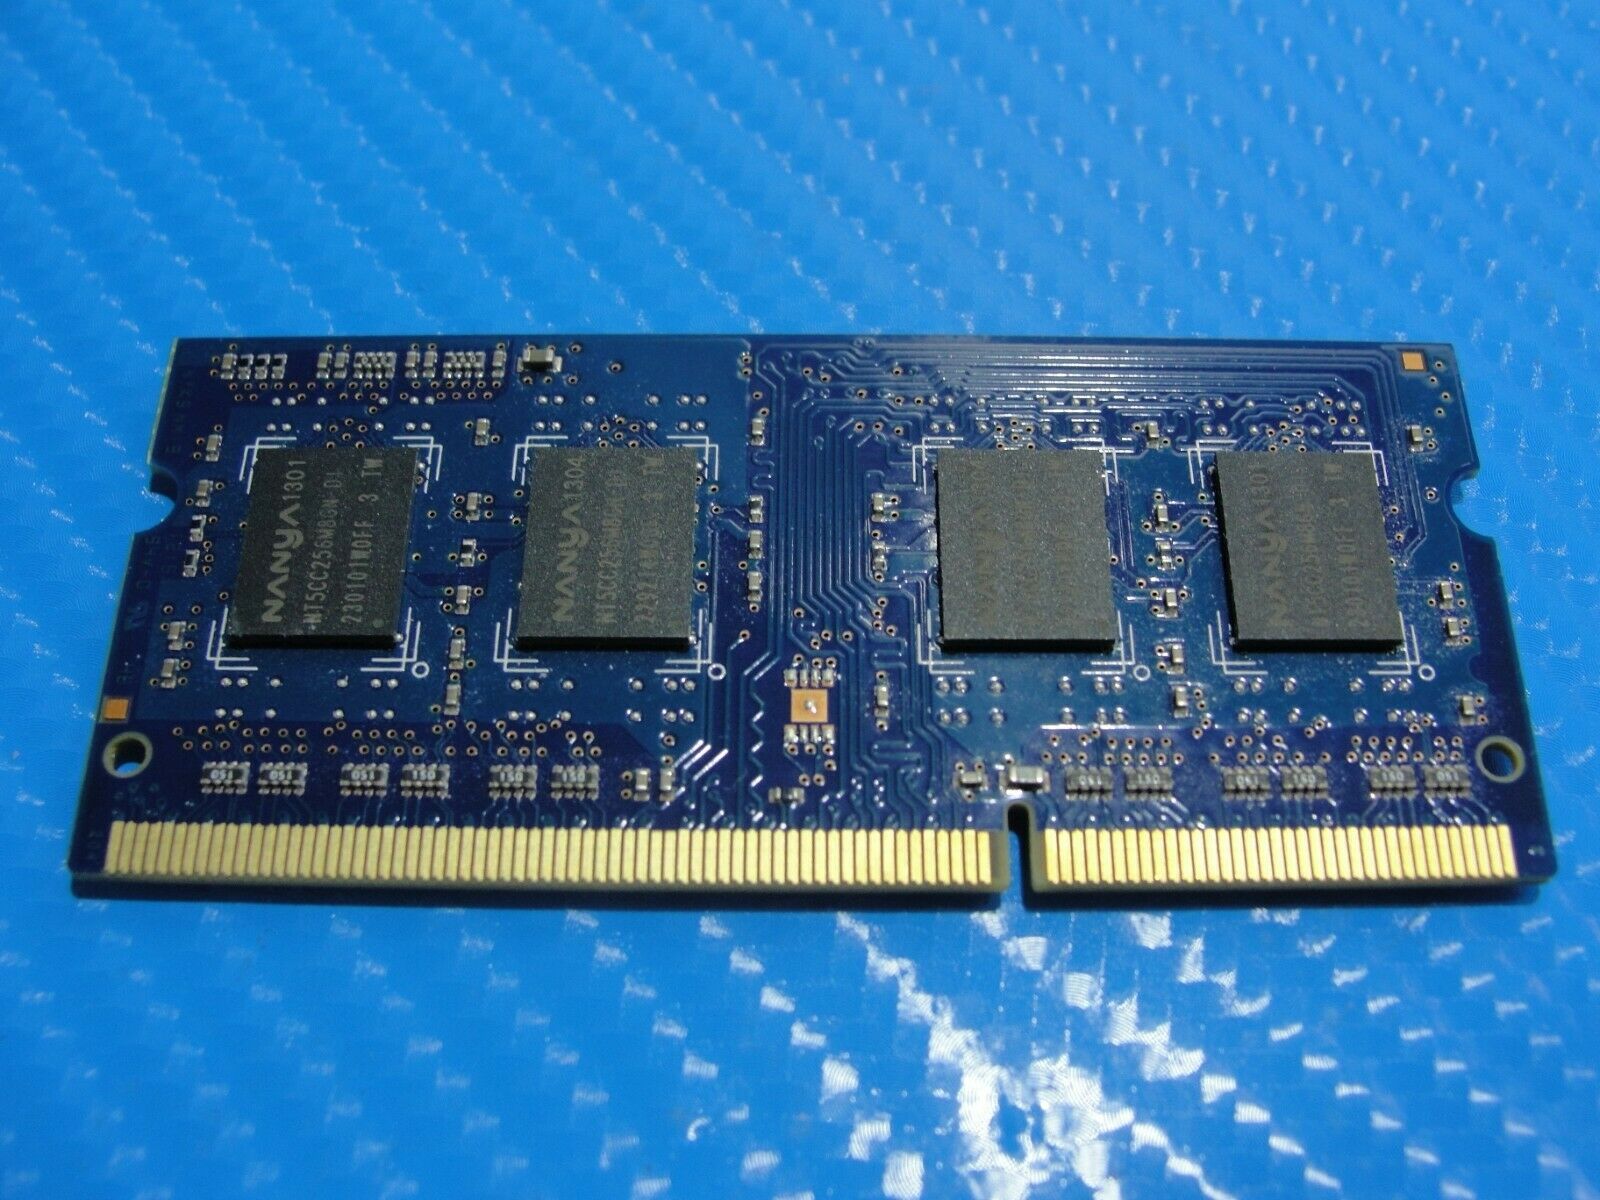 Acer M5-583P-6637 Kingston 2GB PC3L-12800S SO-DIMM Memory RAM ACR16D3LS1NGG/2G Kingston